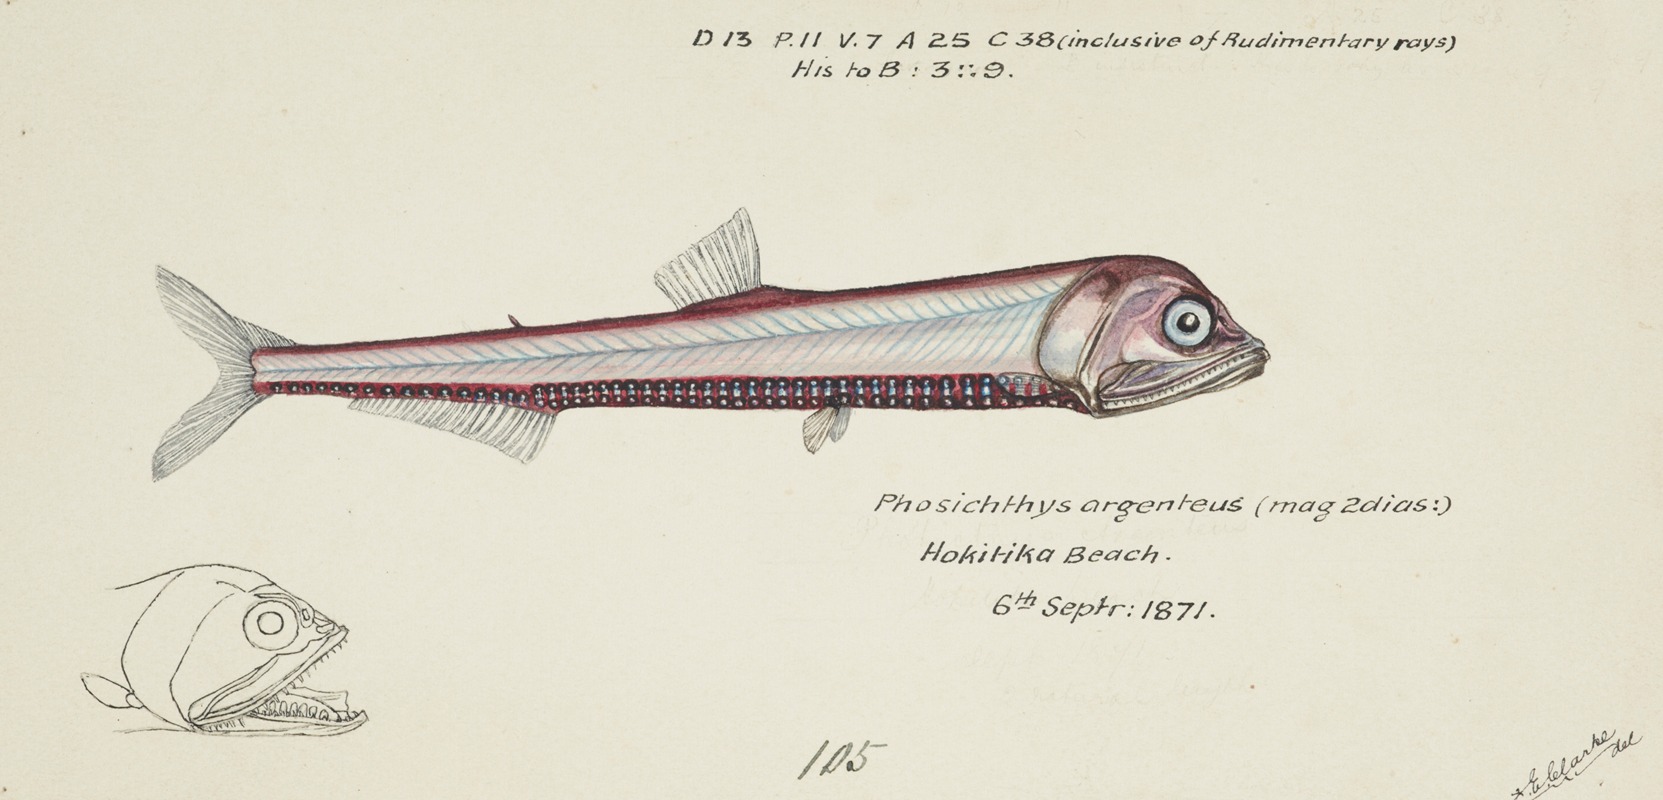 Frank Edward Clarke - Photichthys argenteus (NZ) : Lighthouse fish